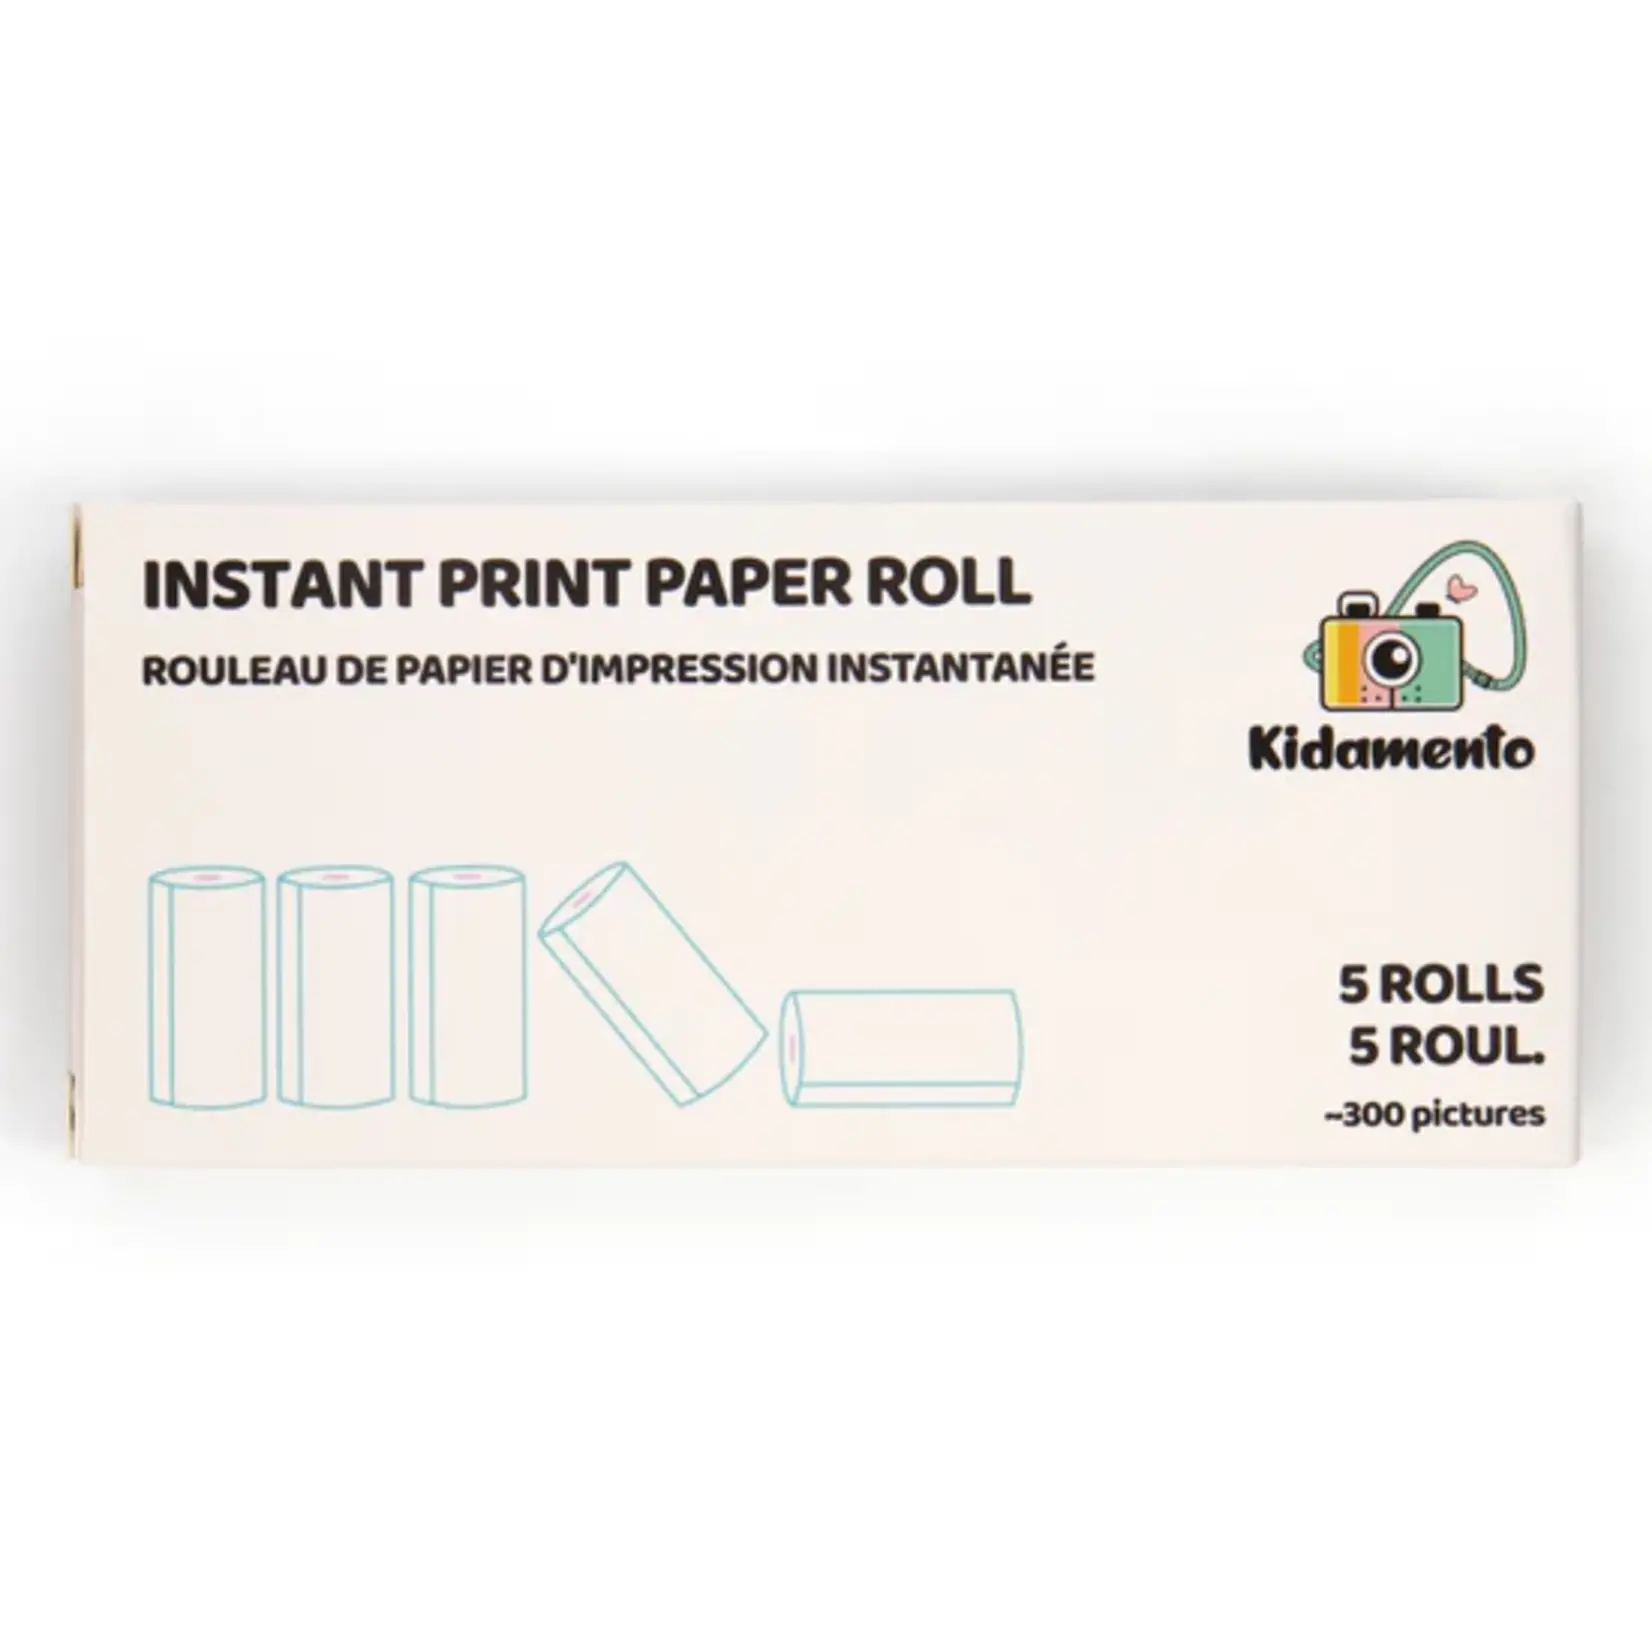 Instant Print Paper Refill